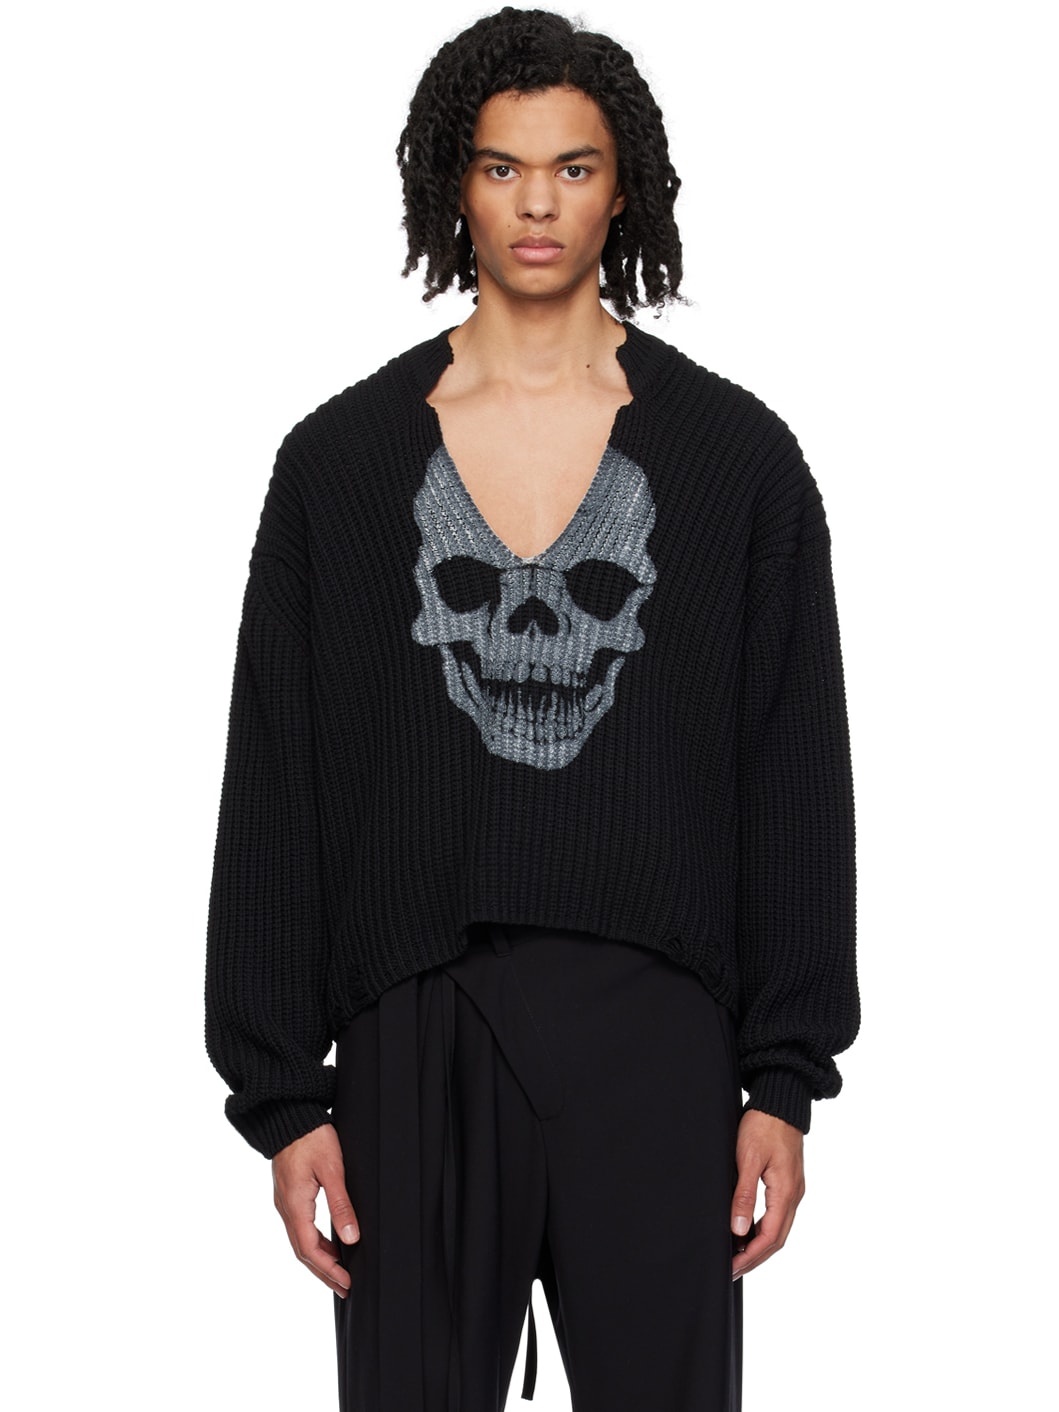 Black Skull Sweater - 1